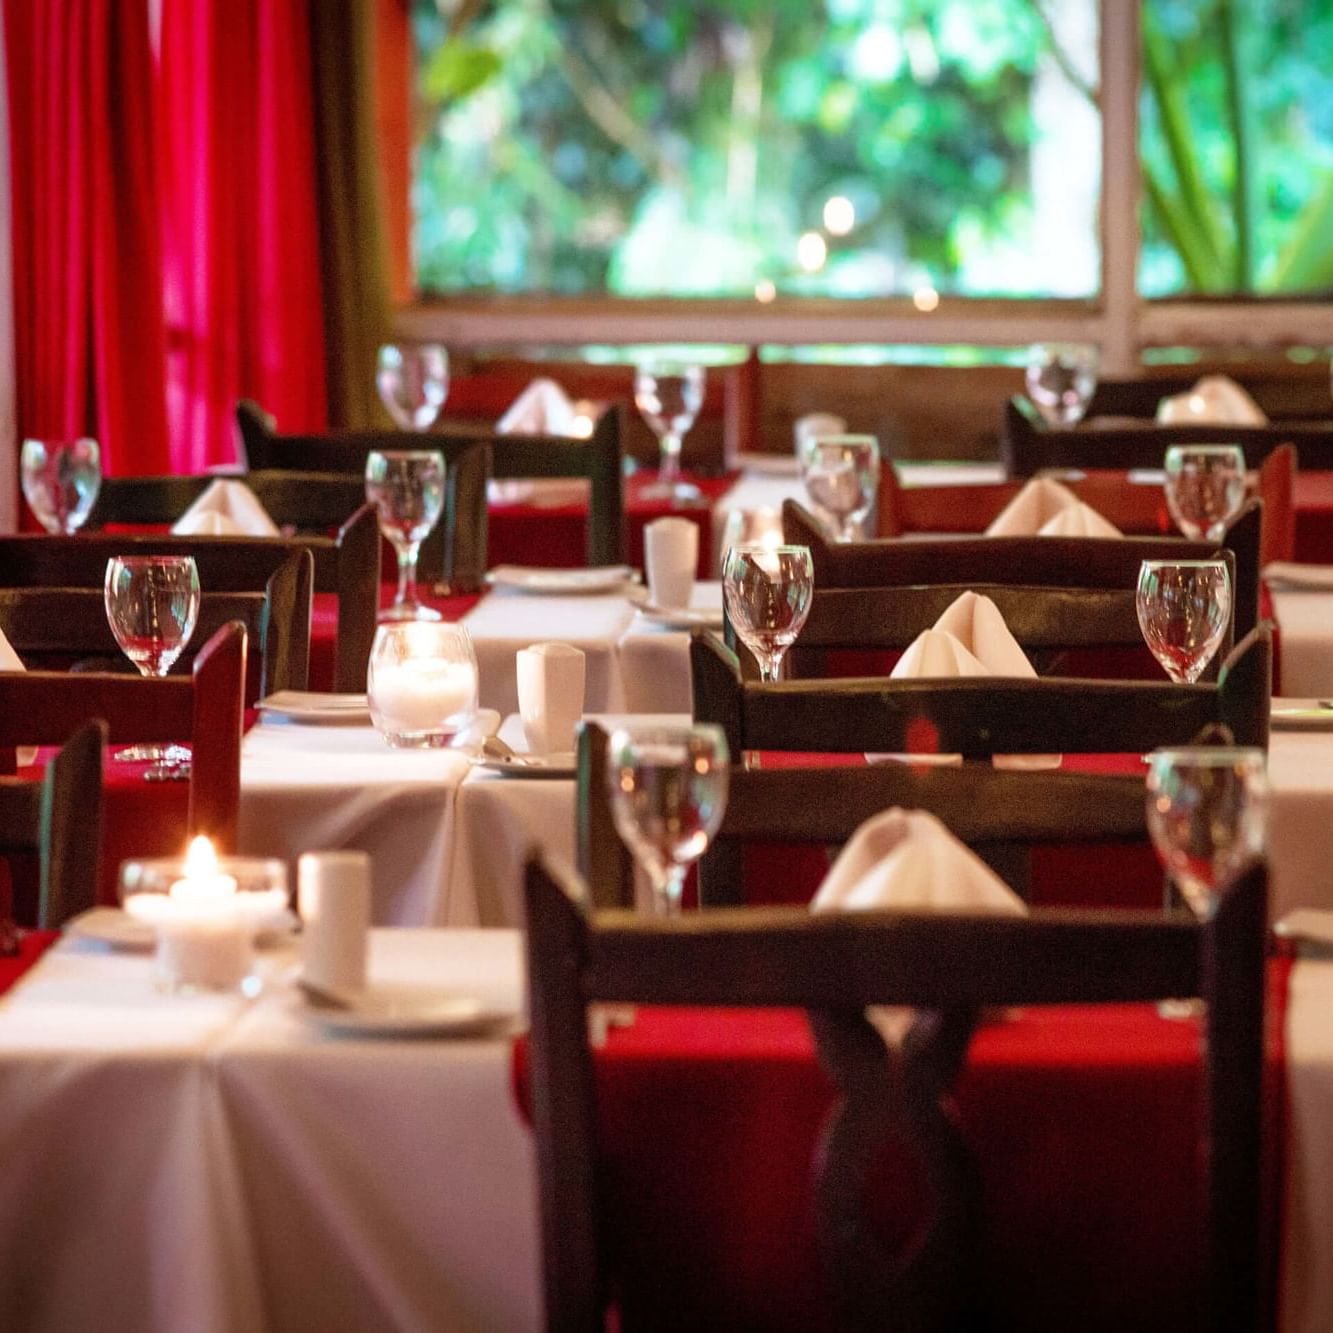 Tables arranged for dining in the La Cantera Lodge de Selva